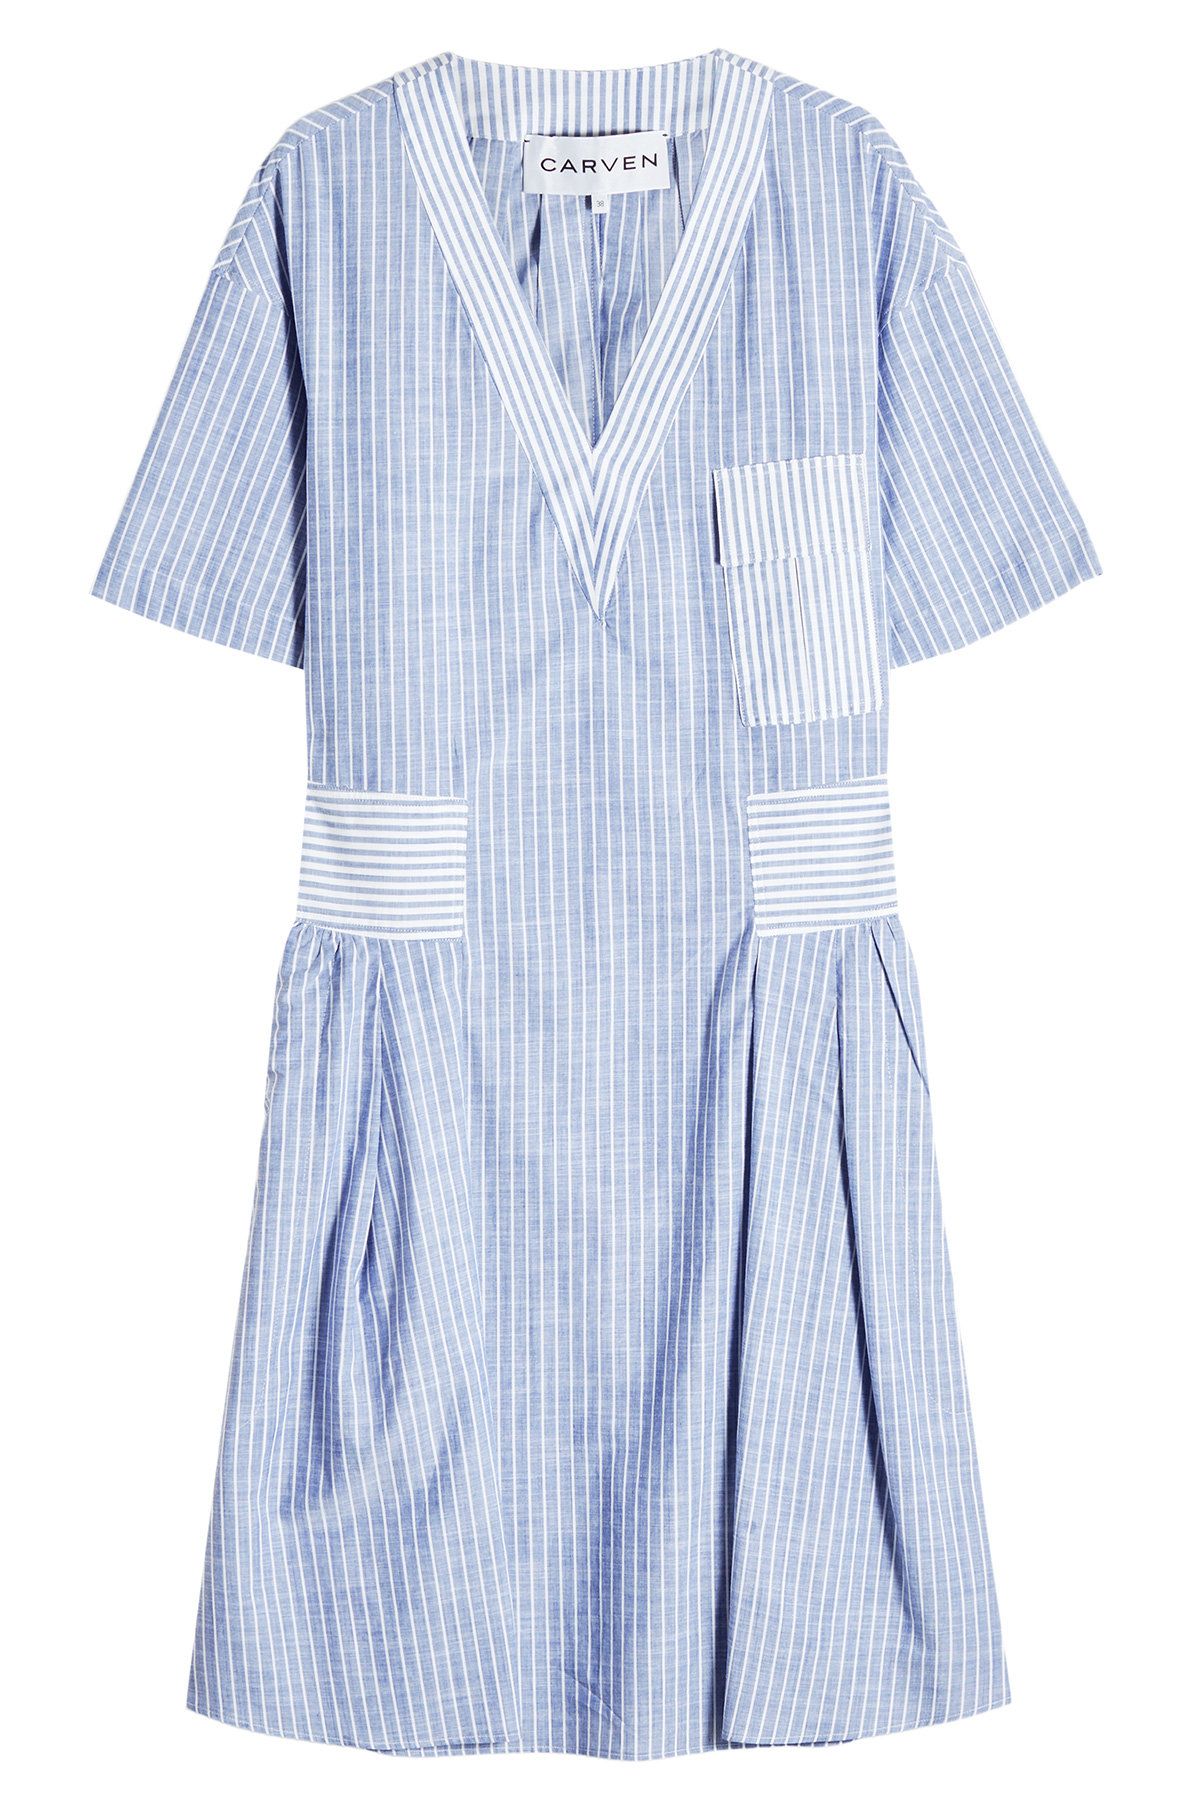 Carven - Striped Cotton Tunic Dress